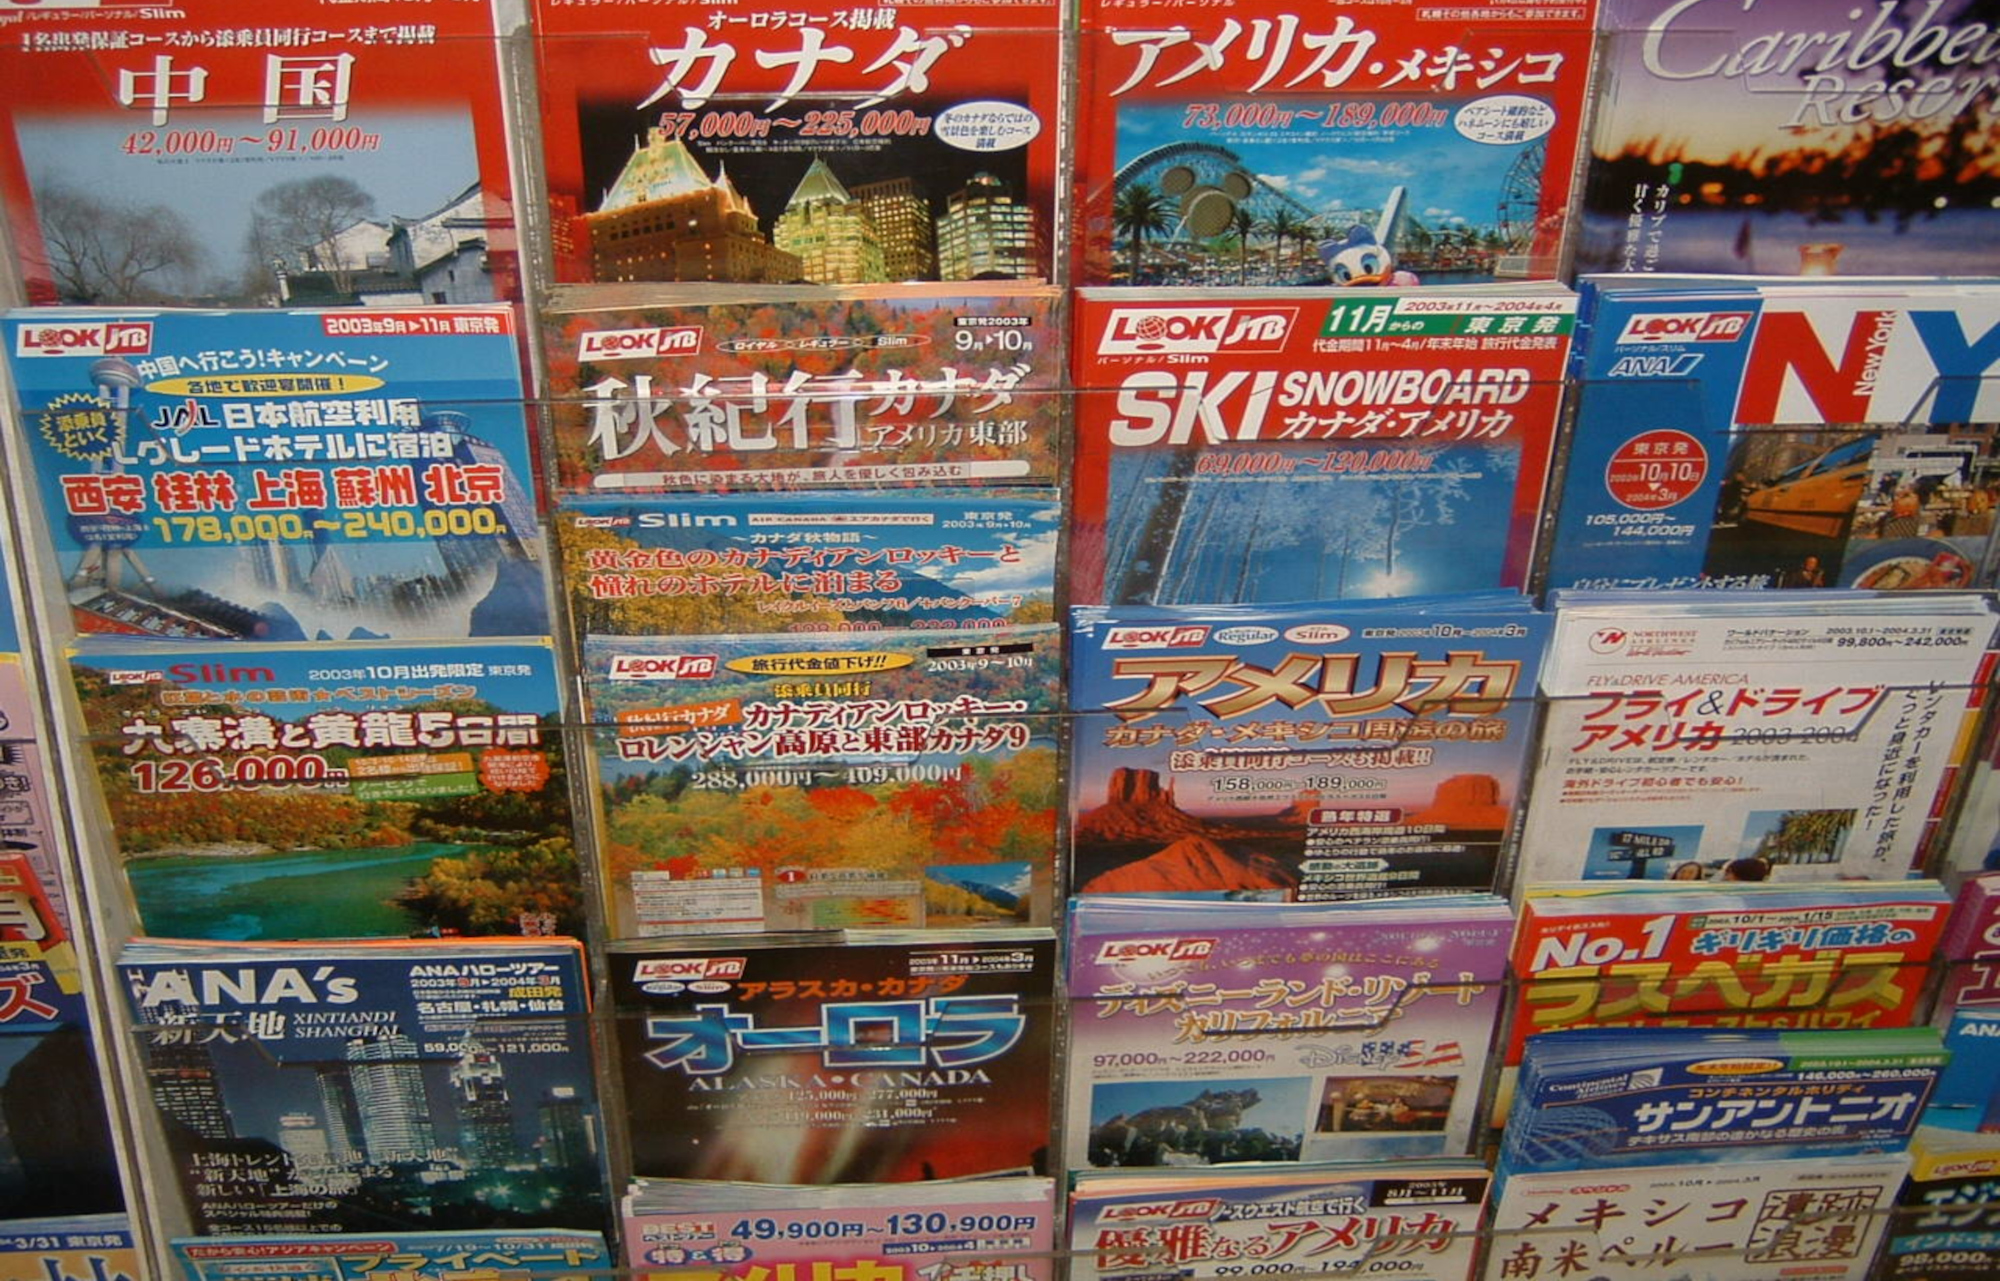 Travel pamphlets